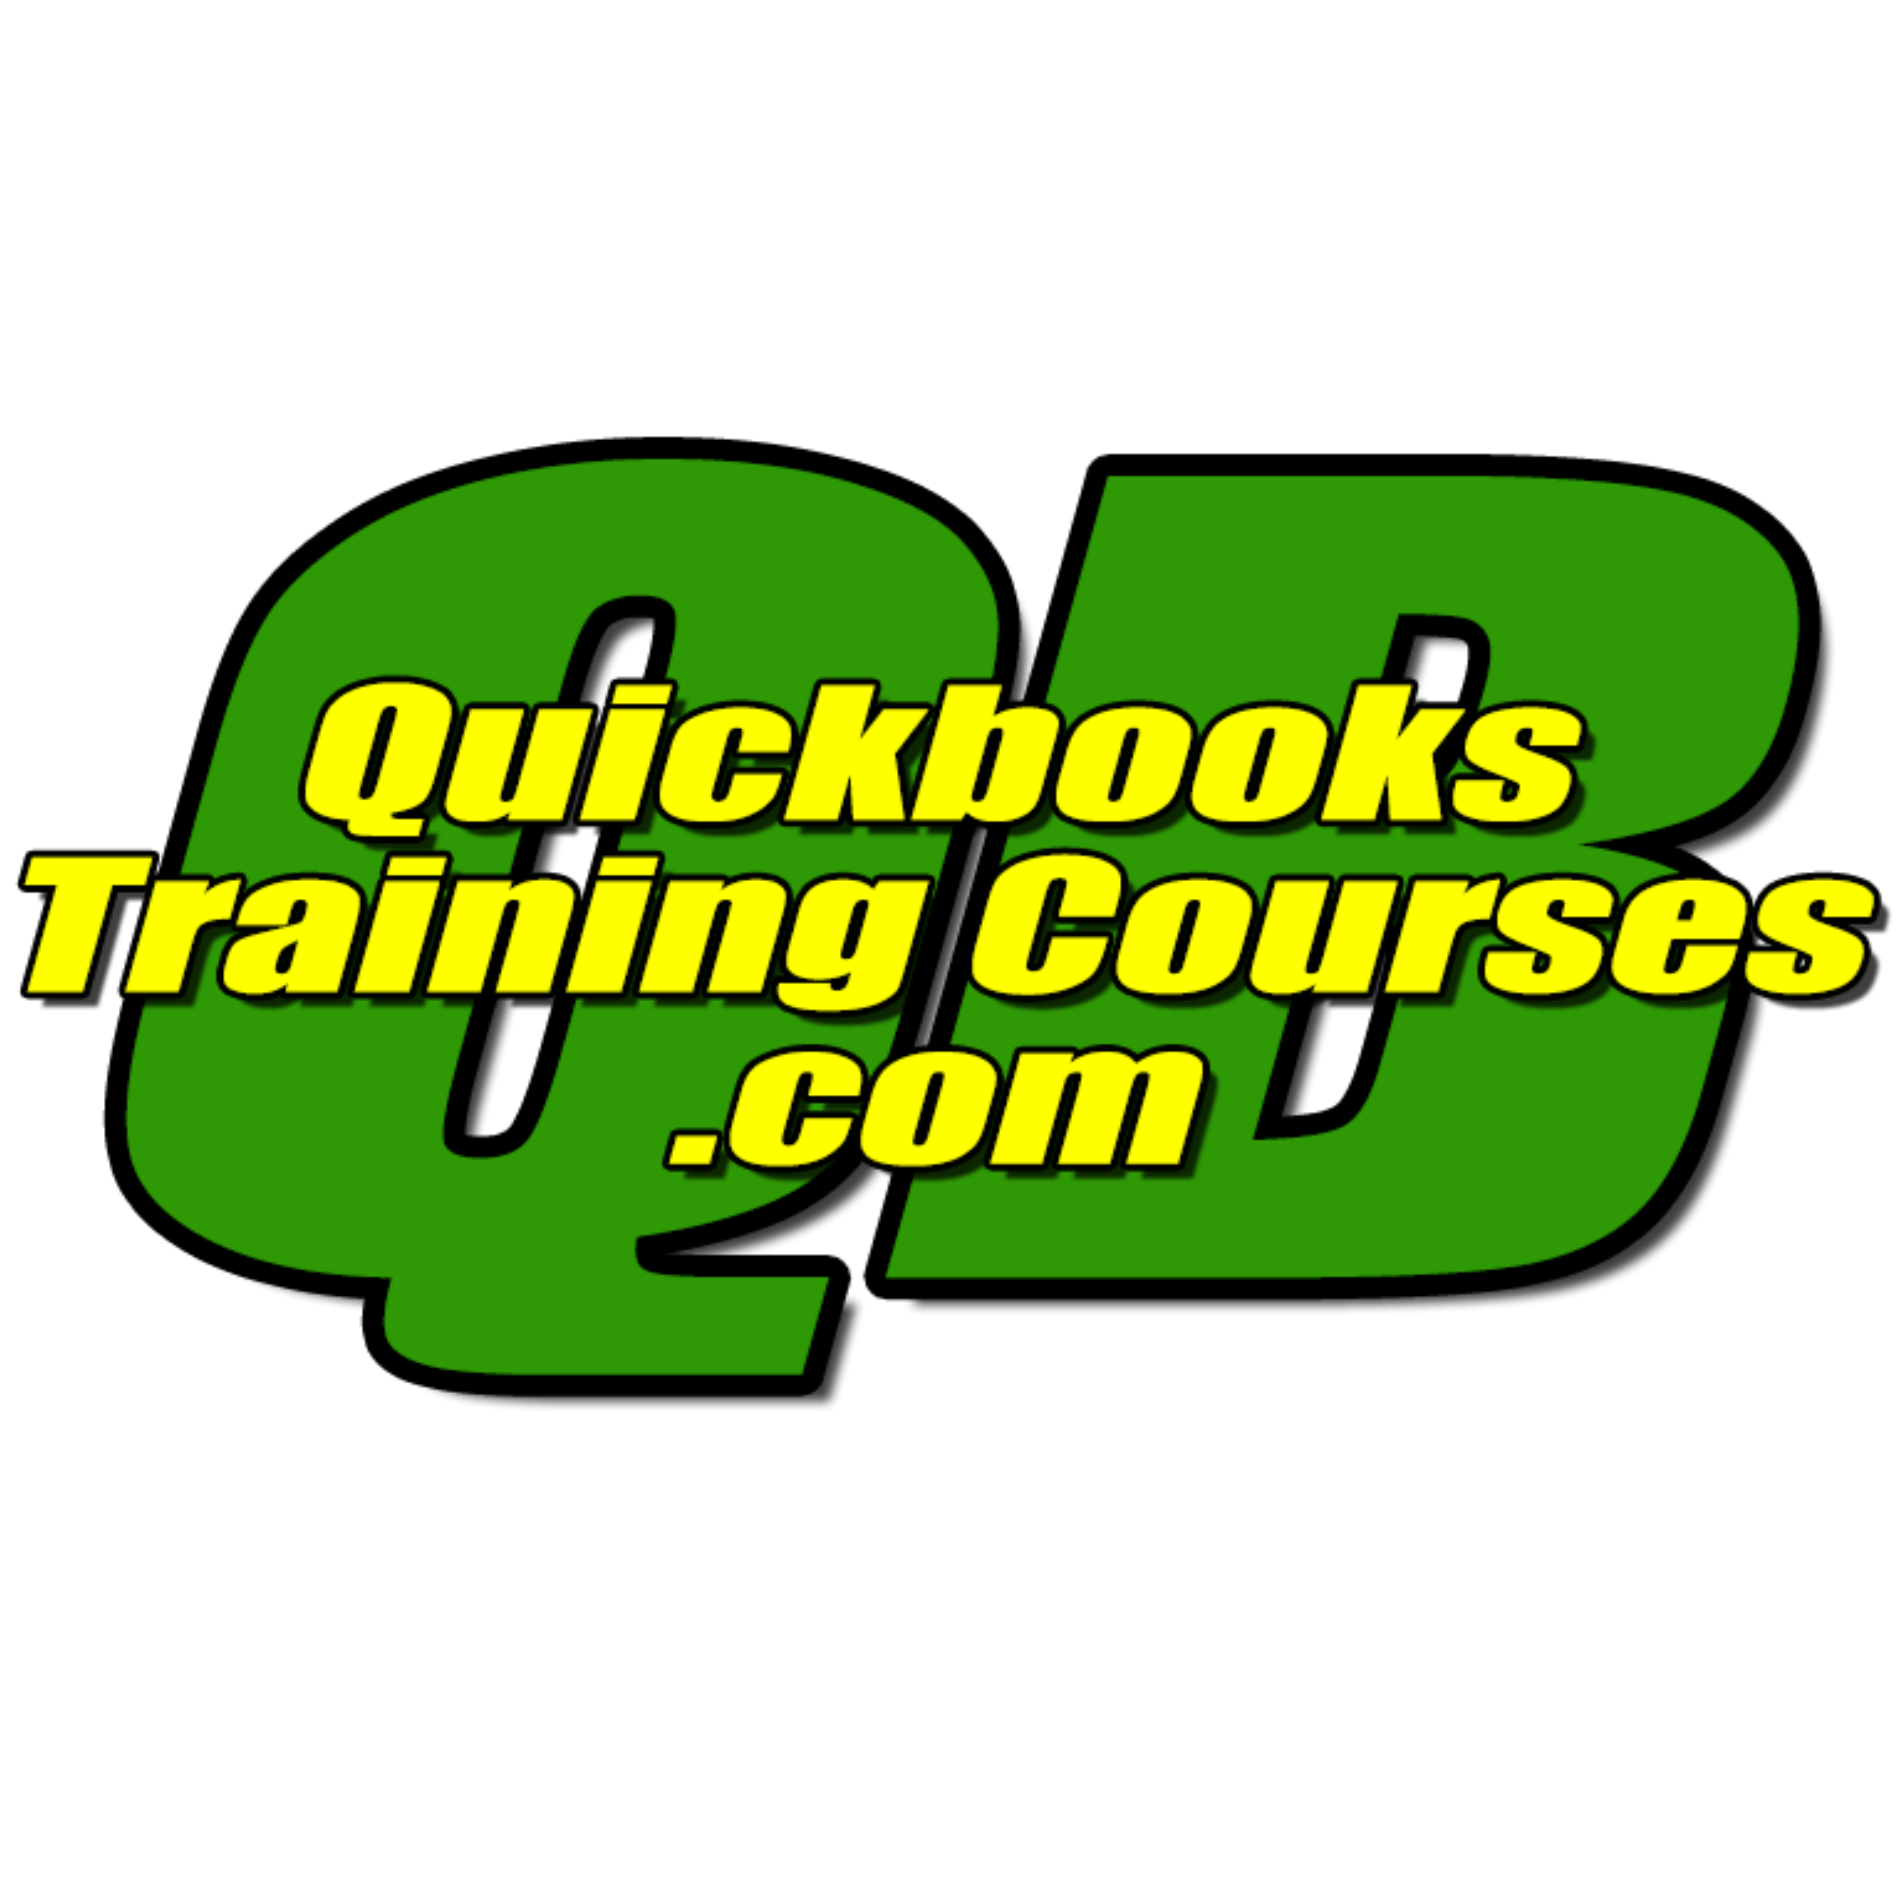 My QuickBooks Training Advisers. Live Instructor. Miami, Orlando, Tampa, United States & International.